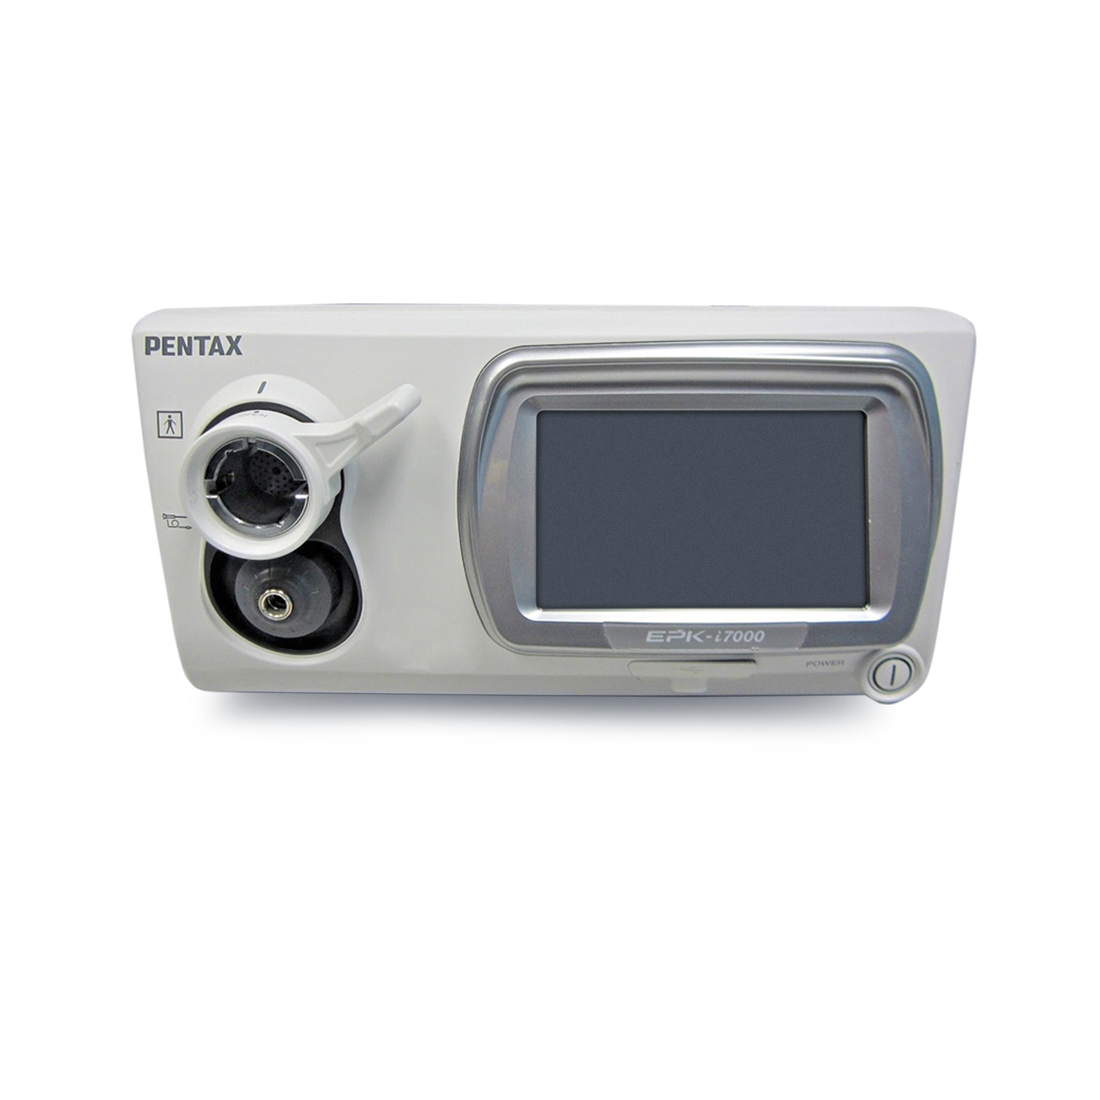 Pentax EPK-i7000 Video Processor